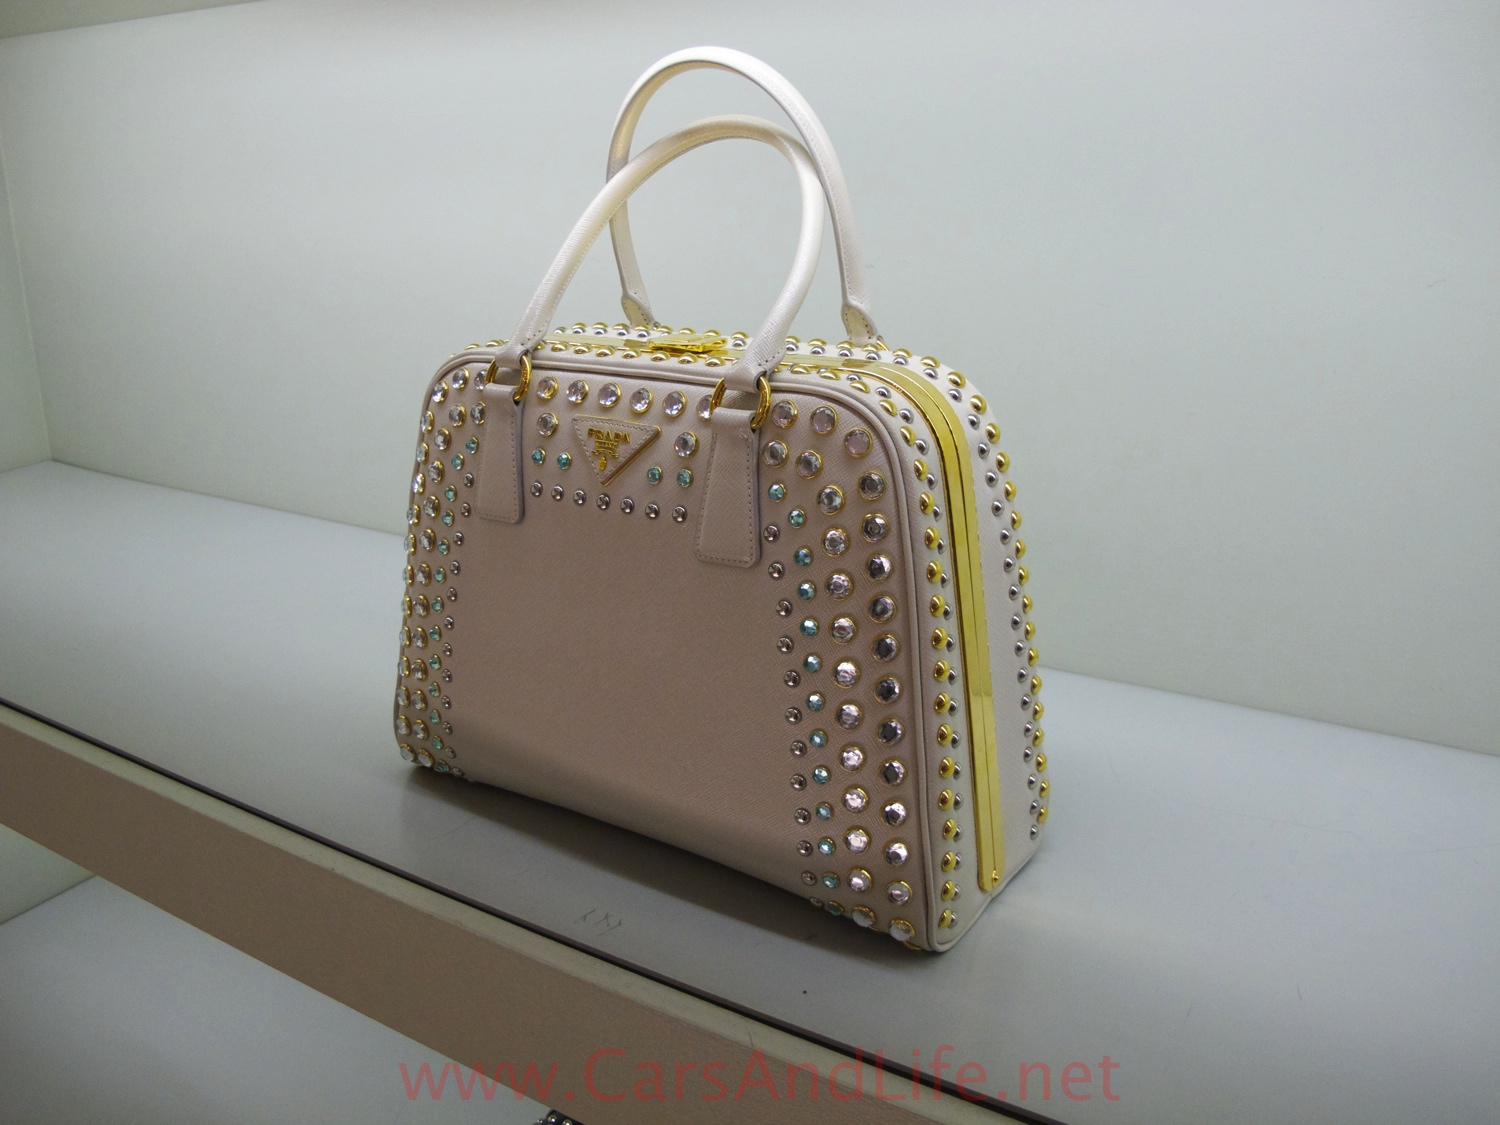 Prada Summer 2013 Handbag Collection | Selfridges